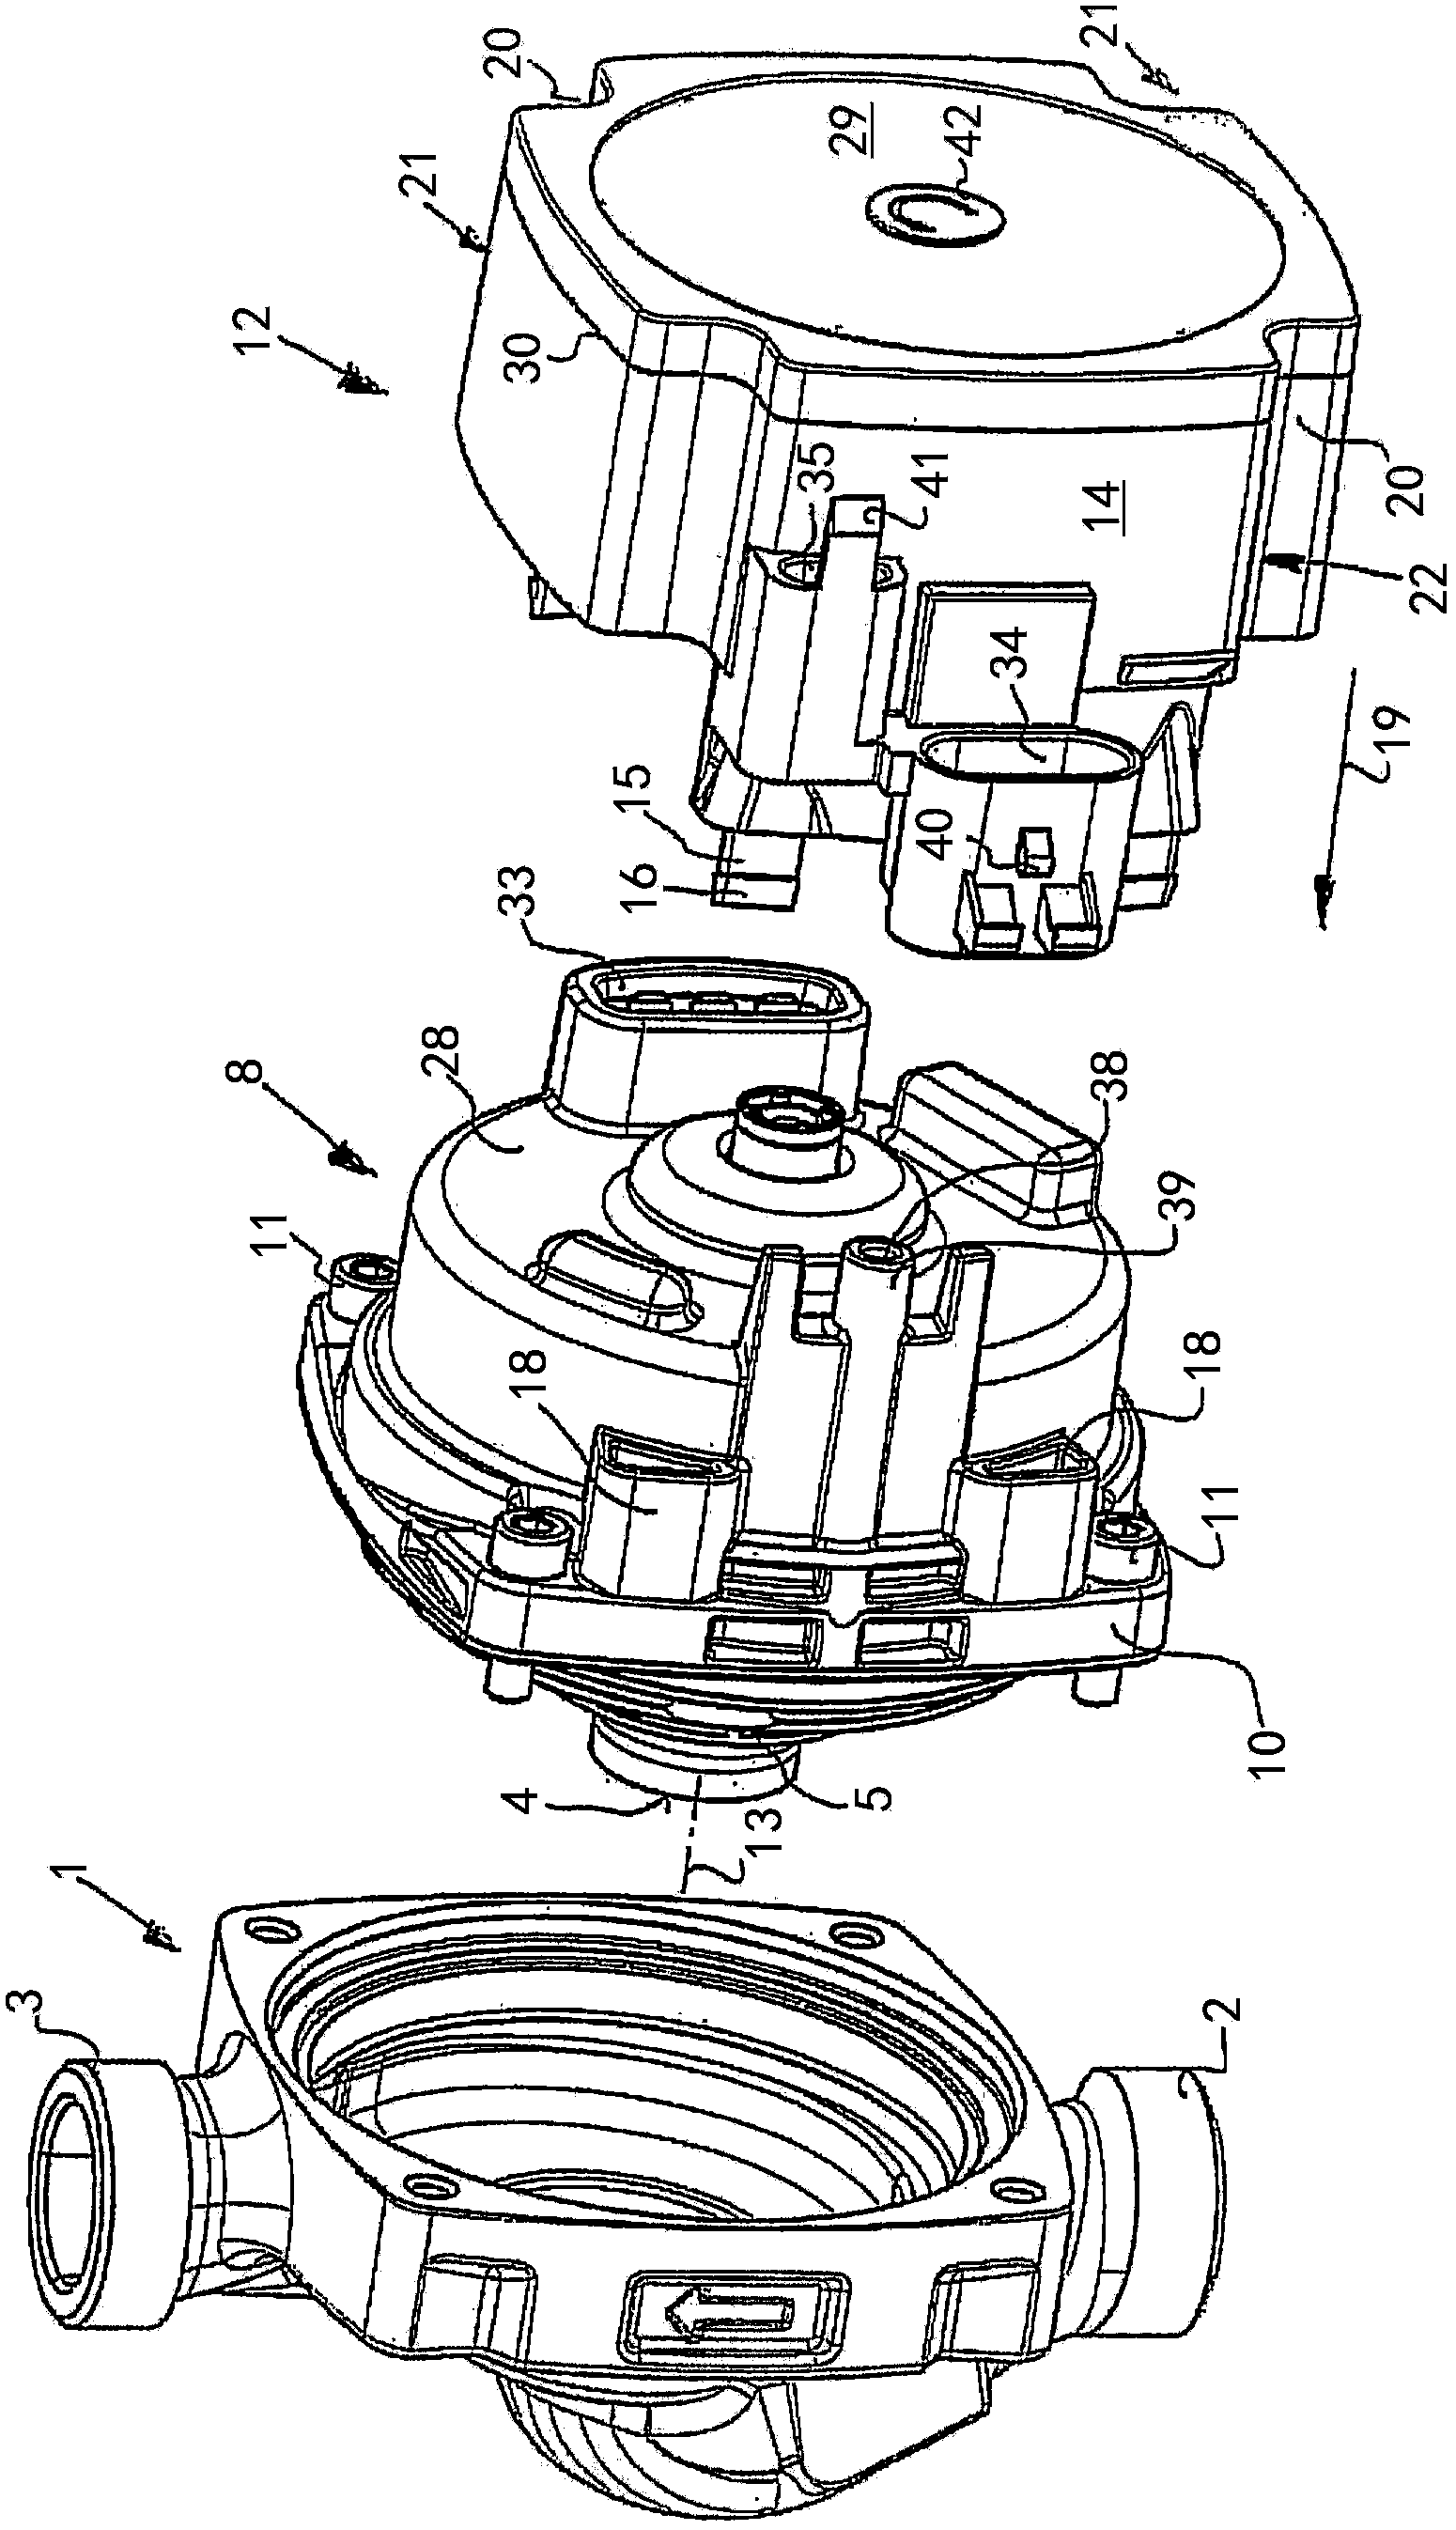 Heating circulating pump